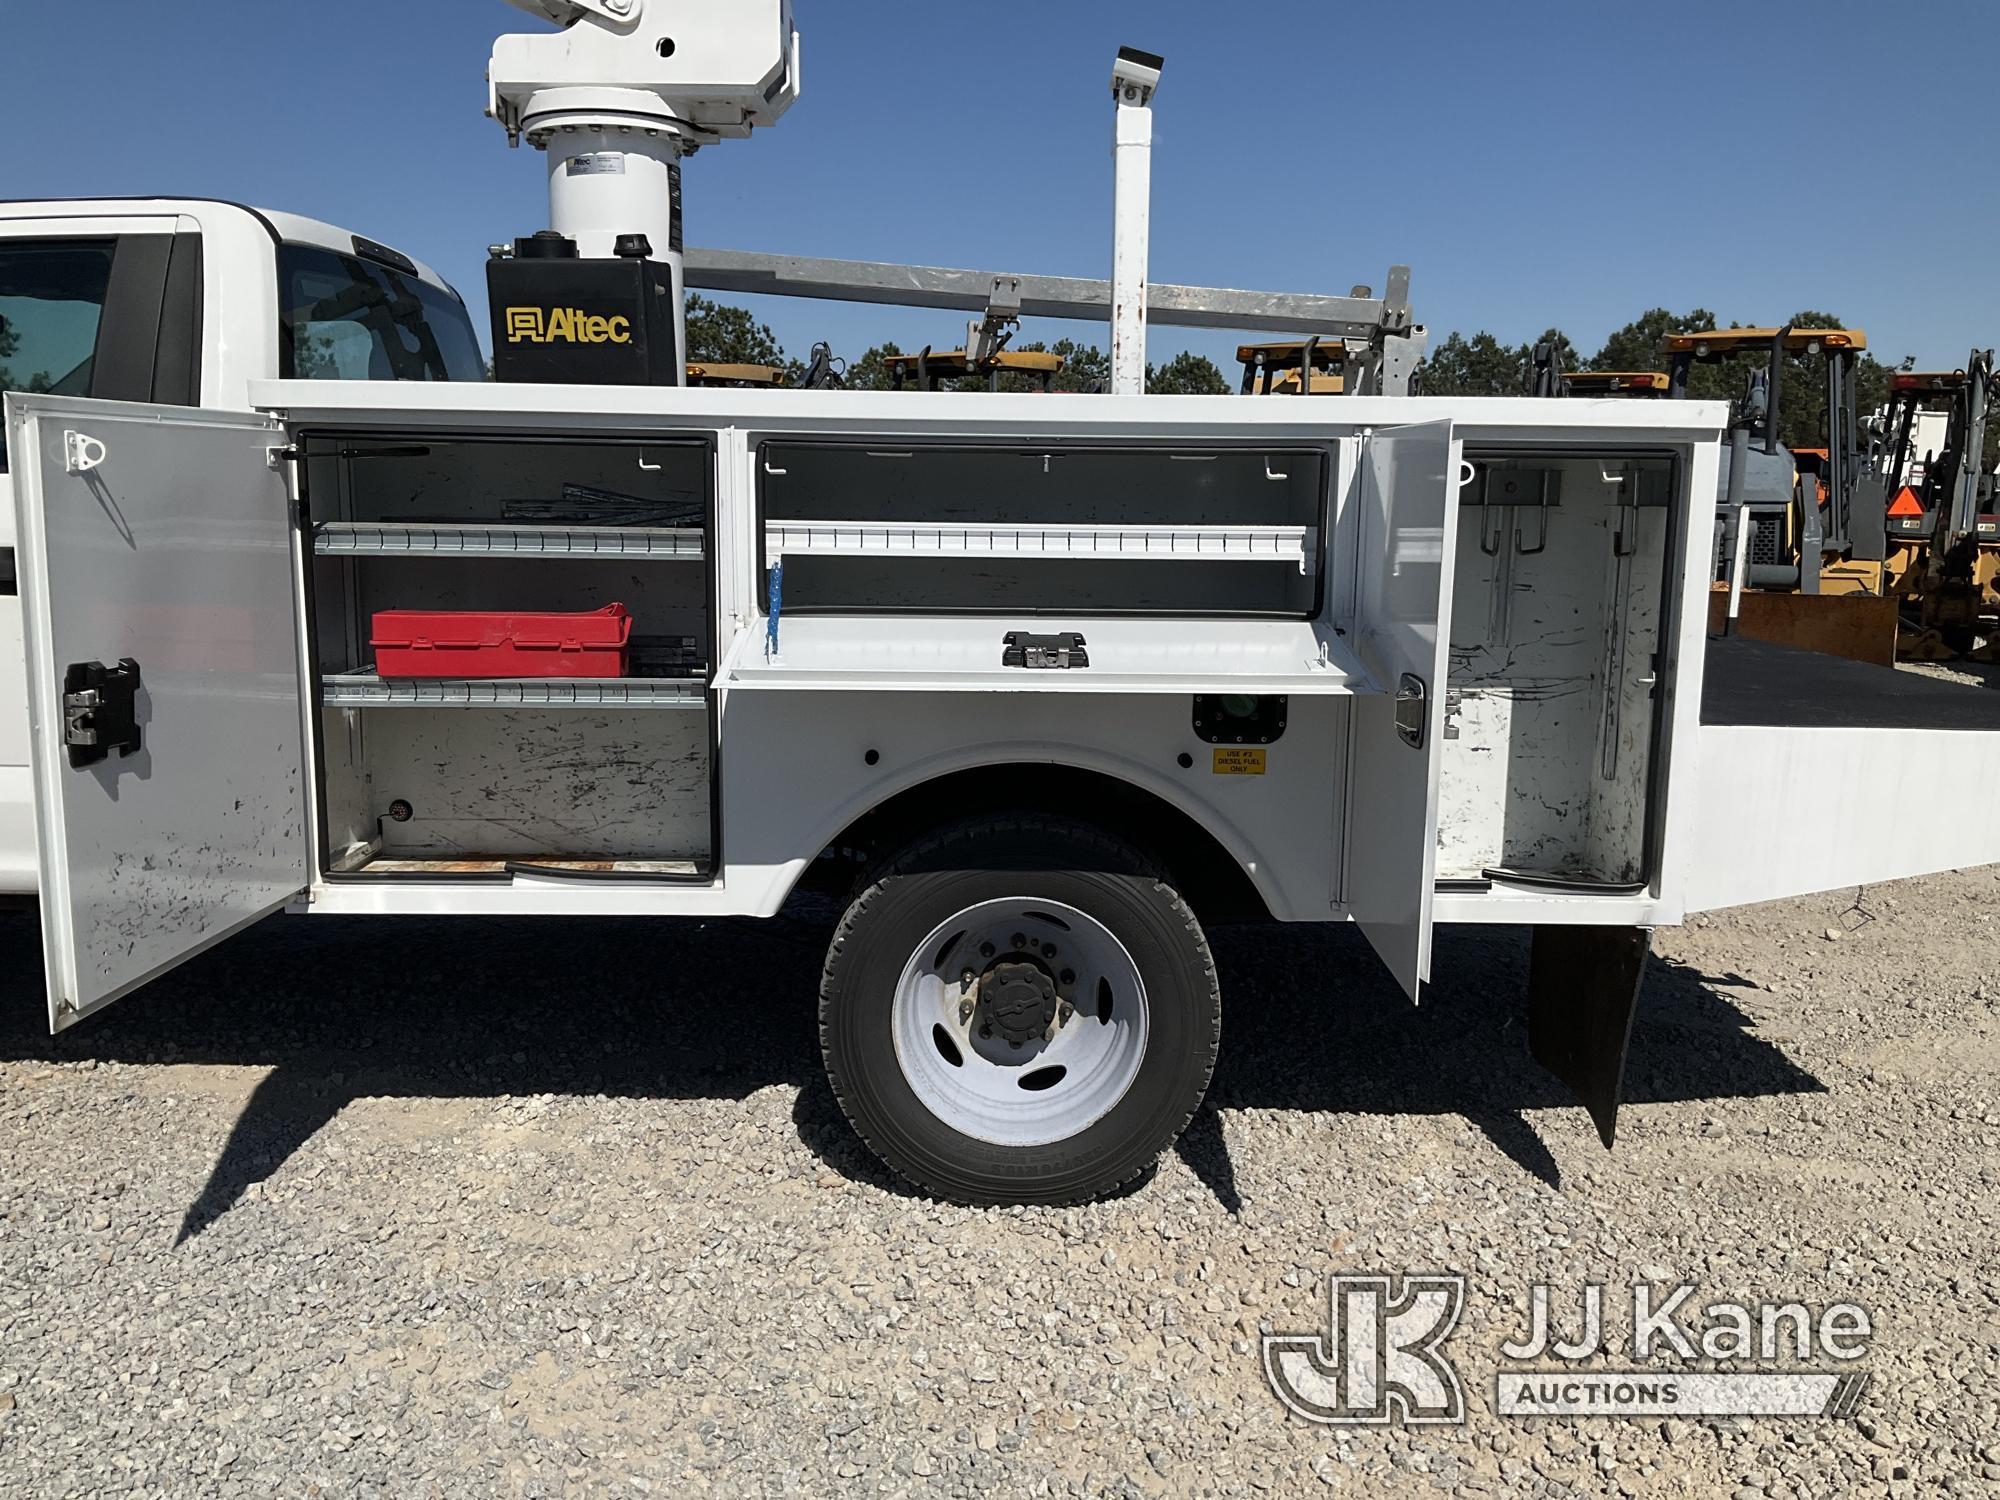 (Villa Rica, GA) Altec AT235, Articulating & Telescopic Non-Insulated Bucket Truck mounted behind ca